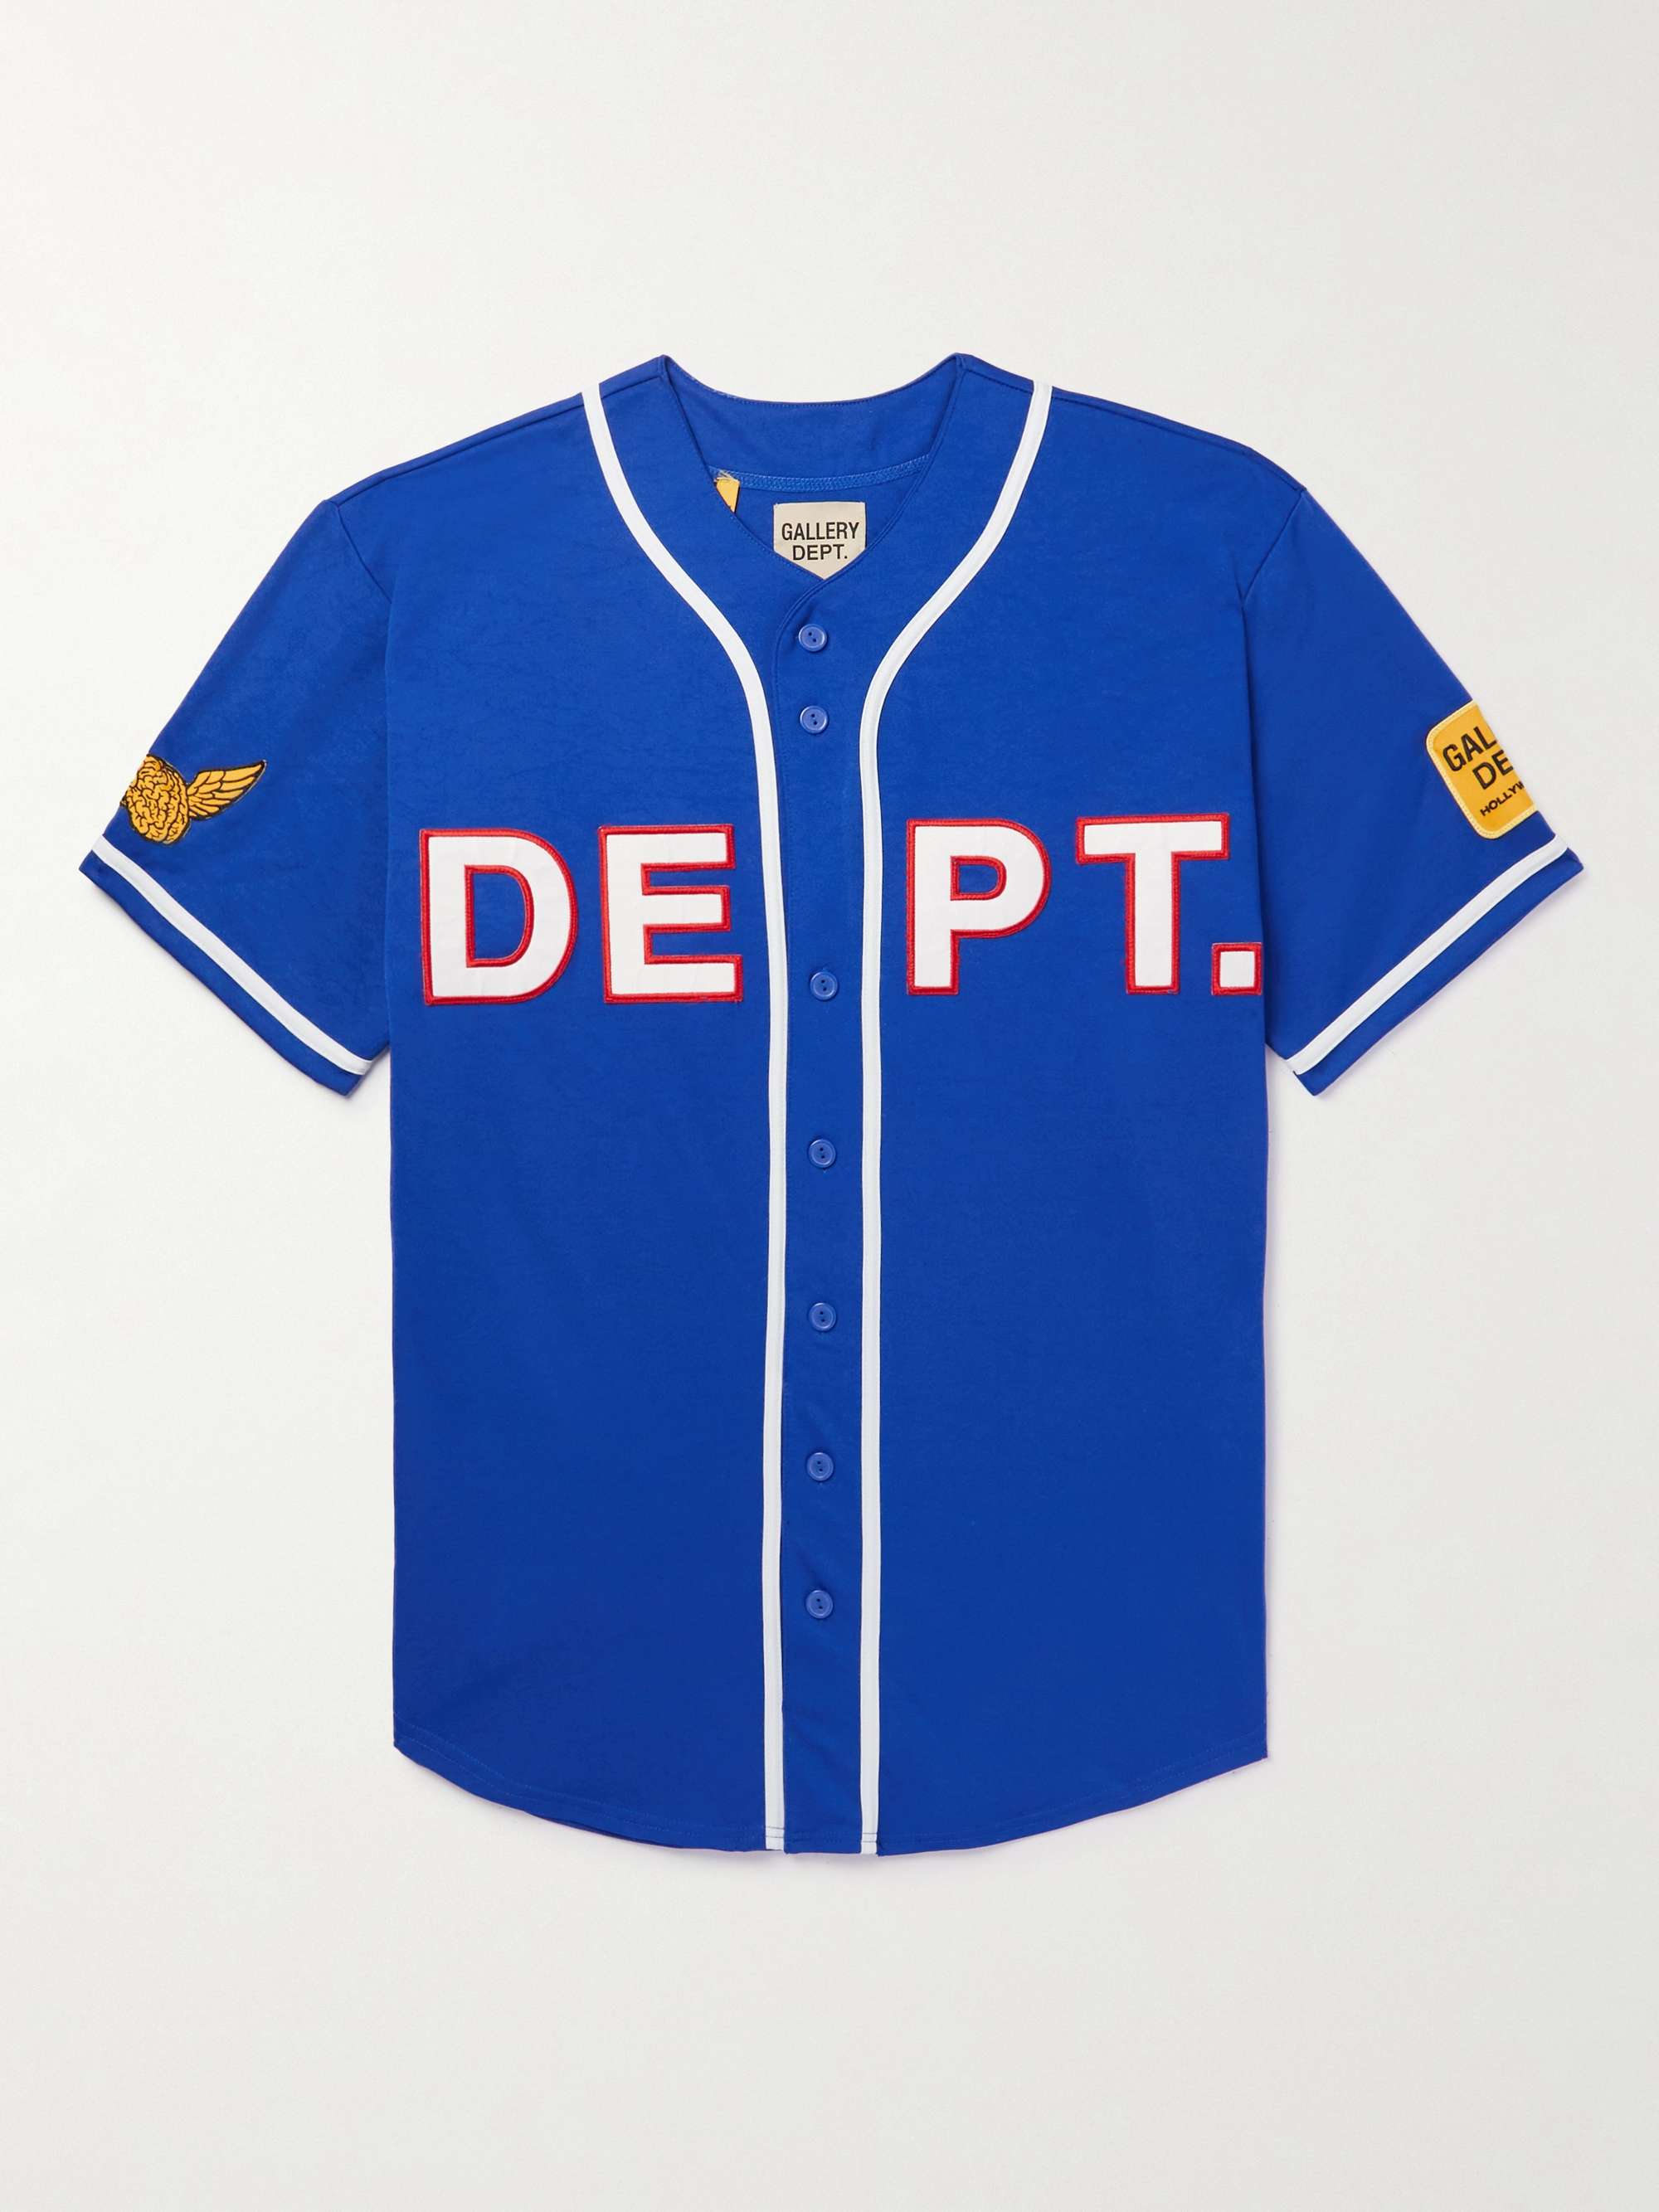 GALLERY DEPT. Echo Park Appliquéd Logo-Print Mesh Shirt